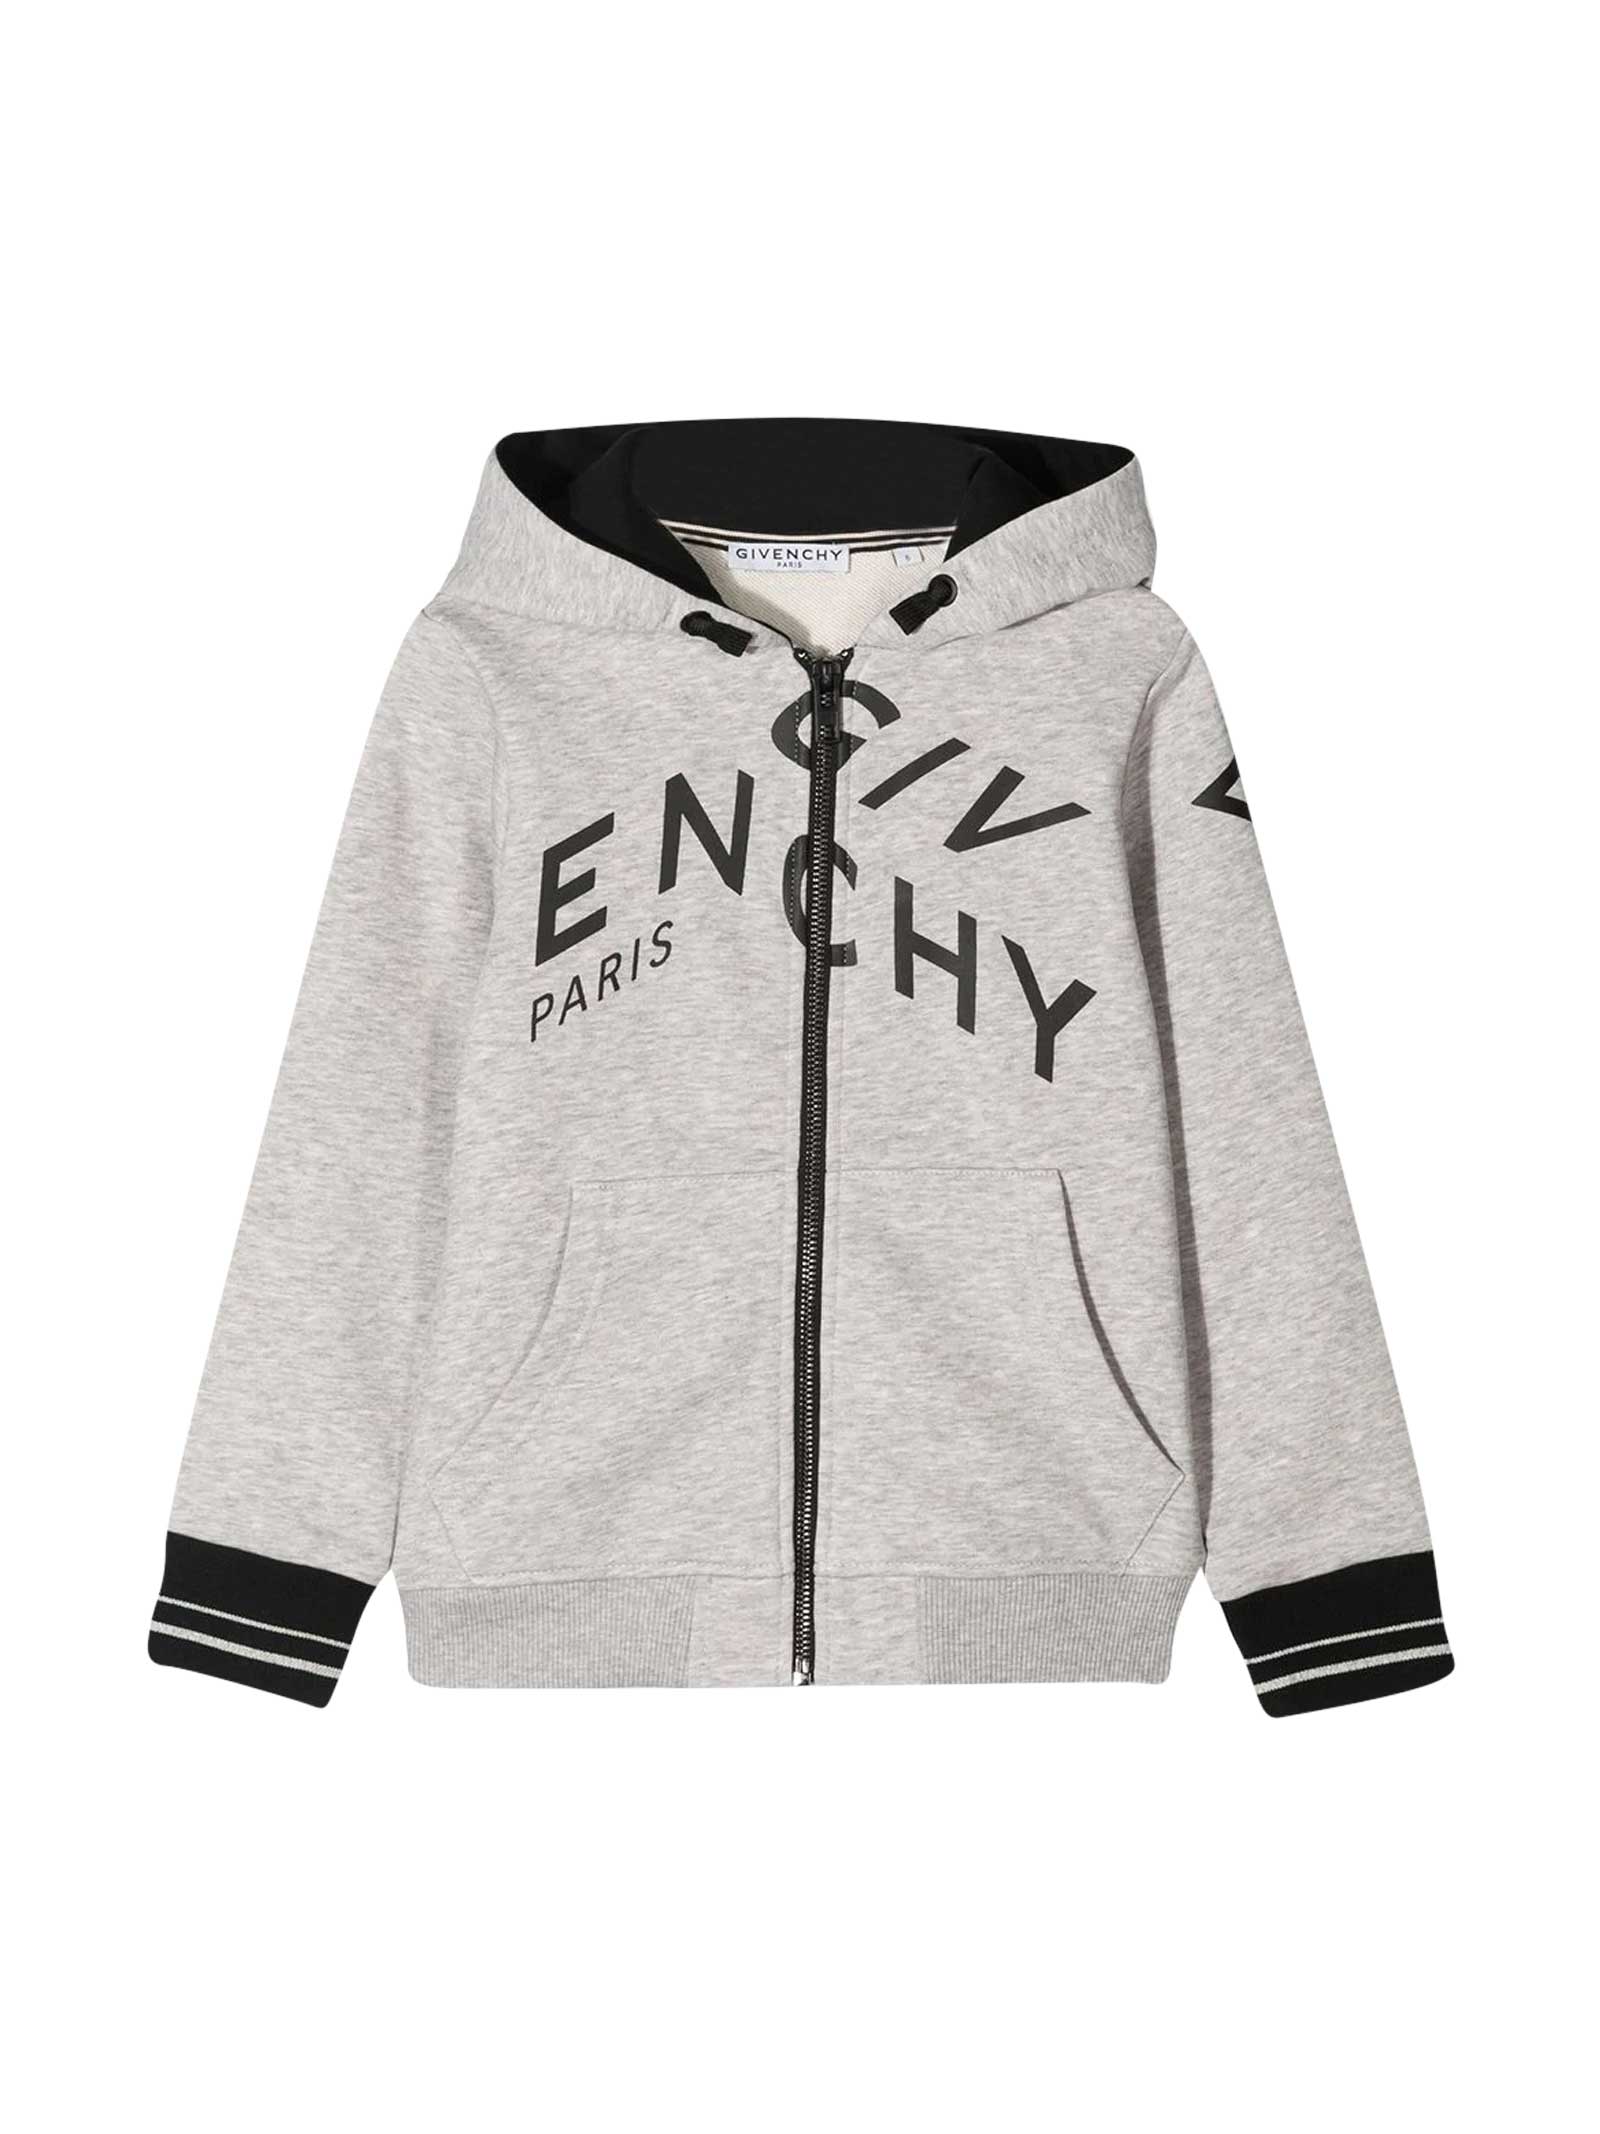 Givenchy Gray Sweatshirt With Hood